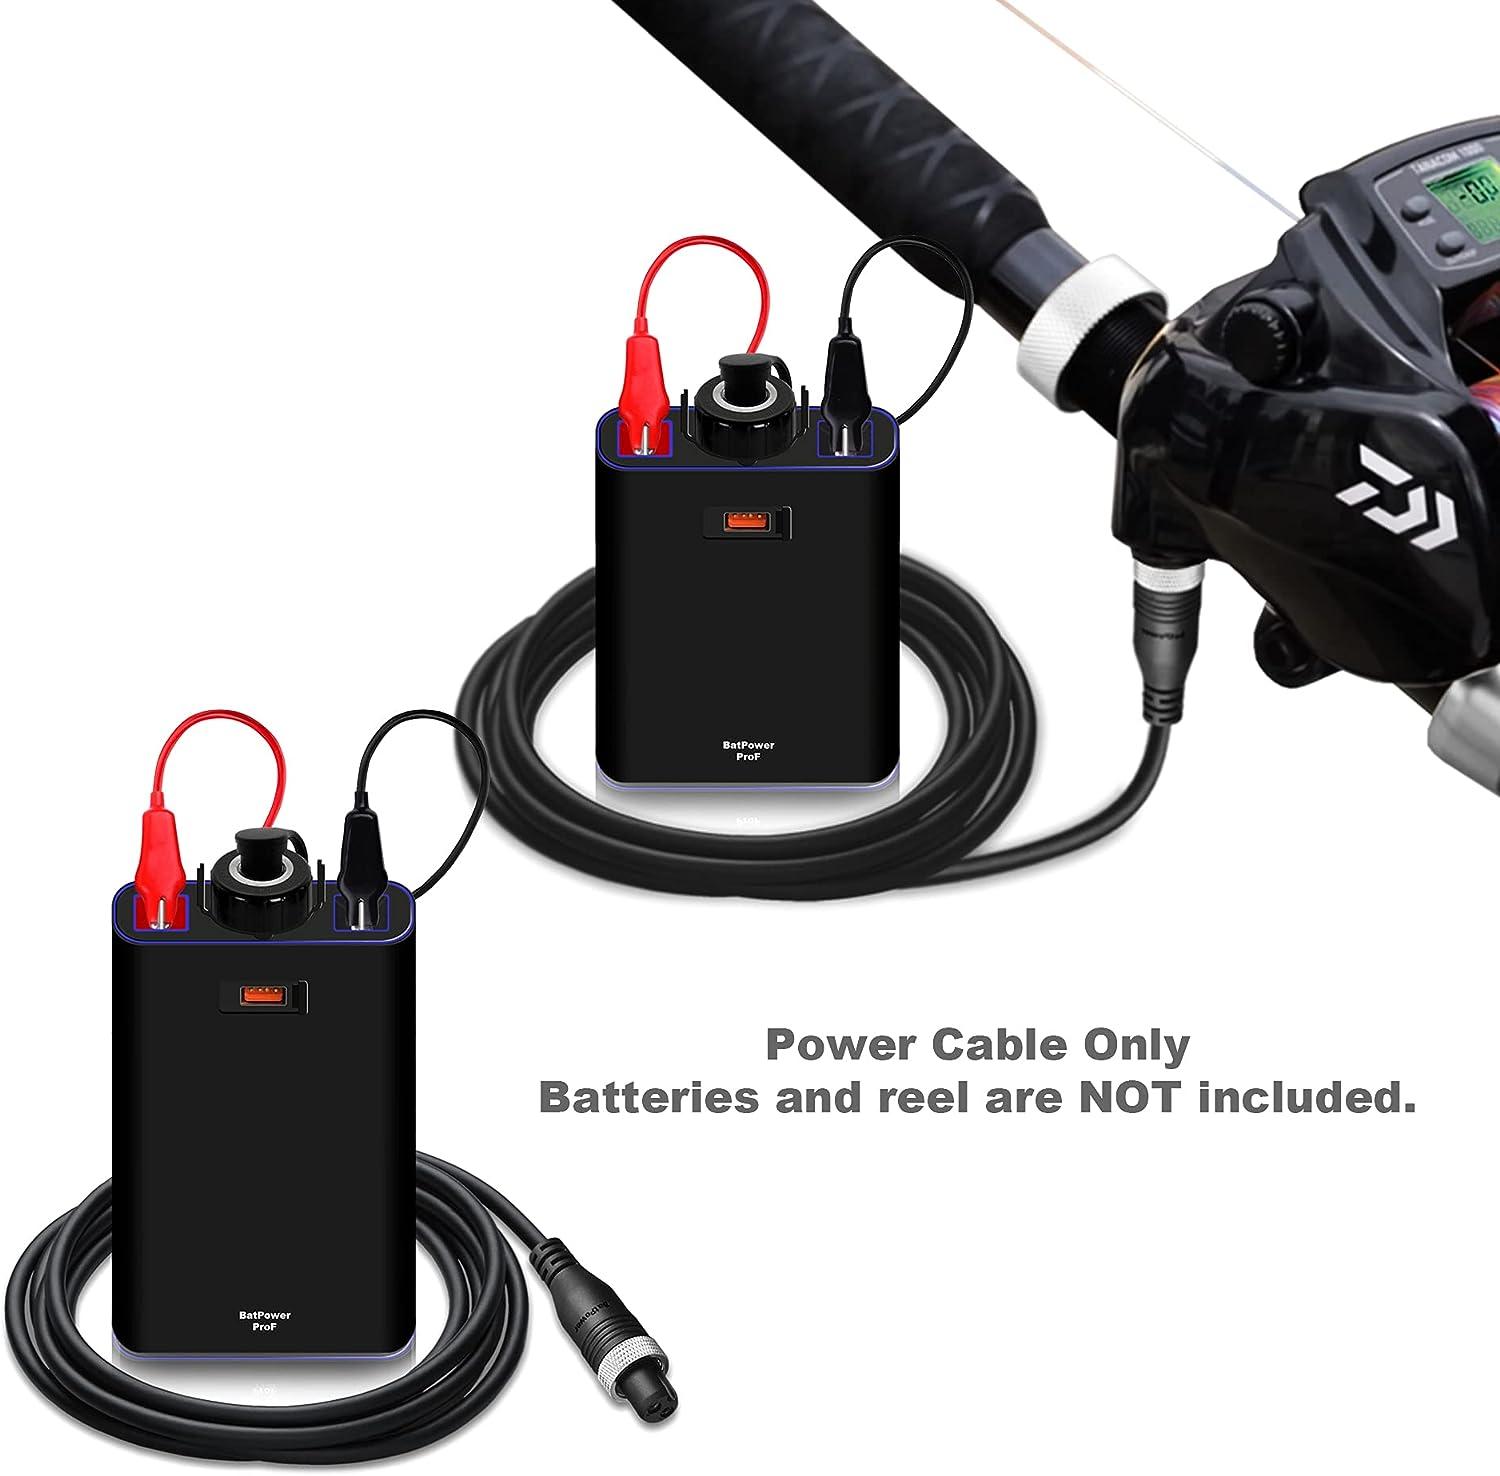  BatPower ProS 6.6FT 6PIN Electric Fishing Reel Power